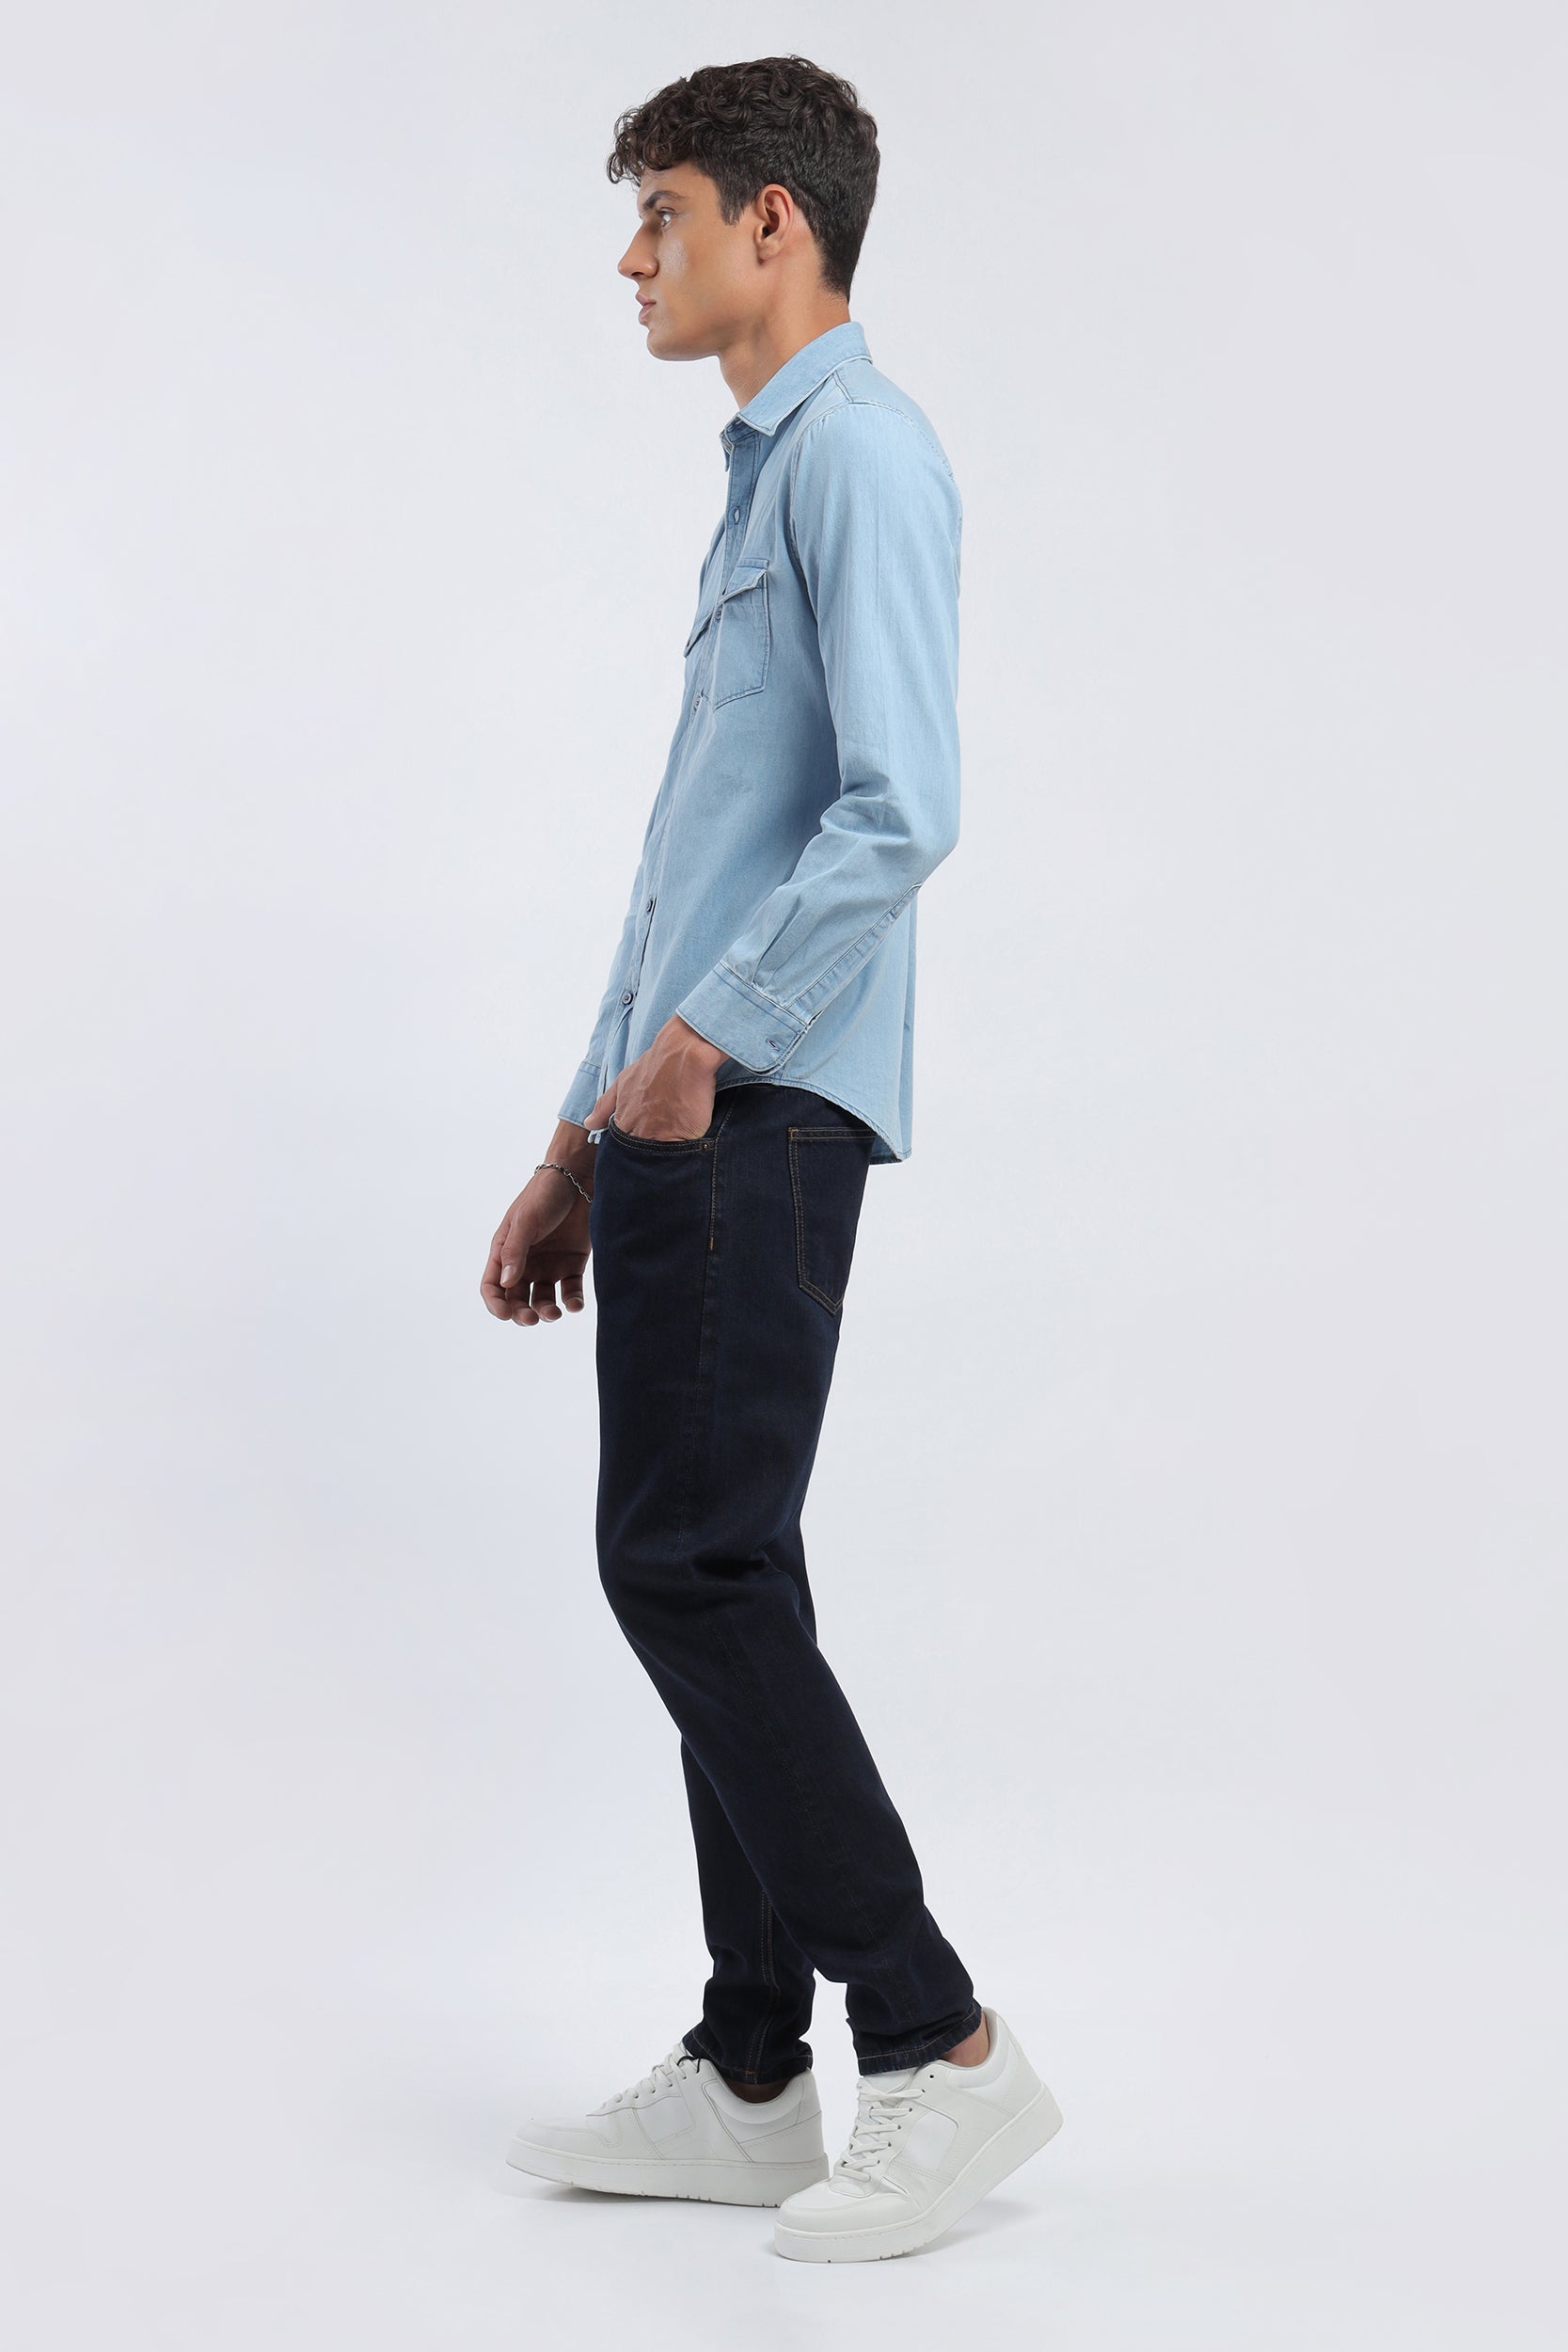 Jackets & Jeans: Menswear Combinations For Blazers, Sport Coats & Denim